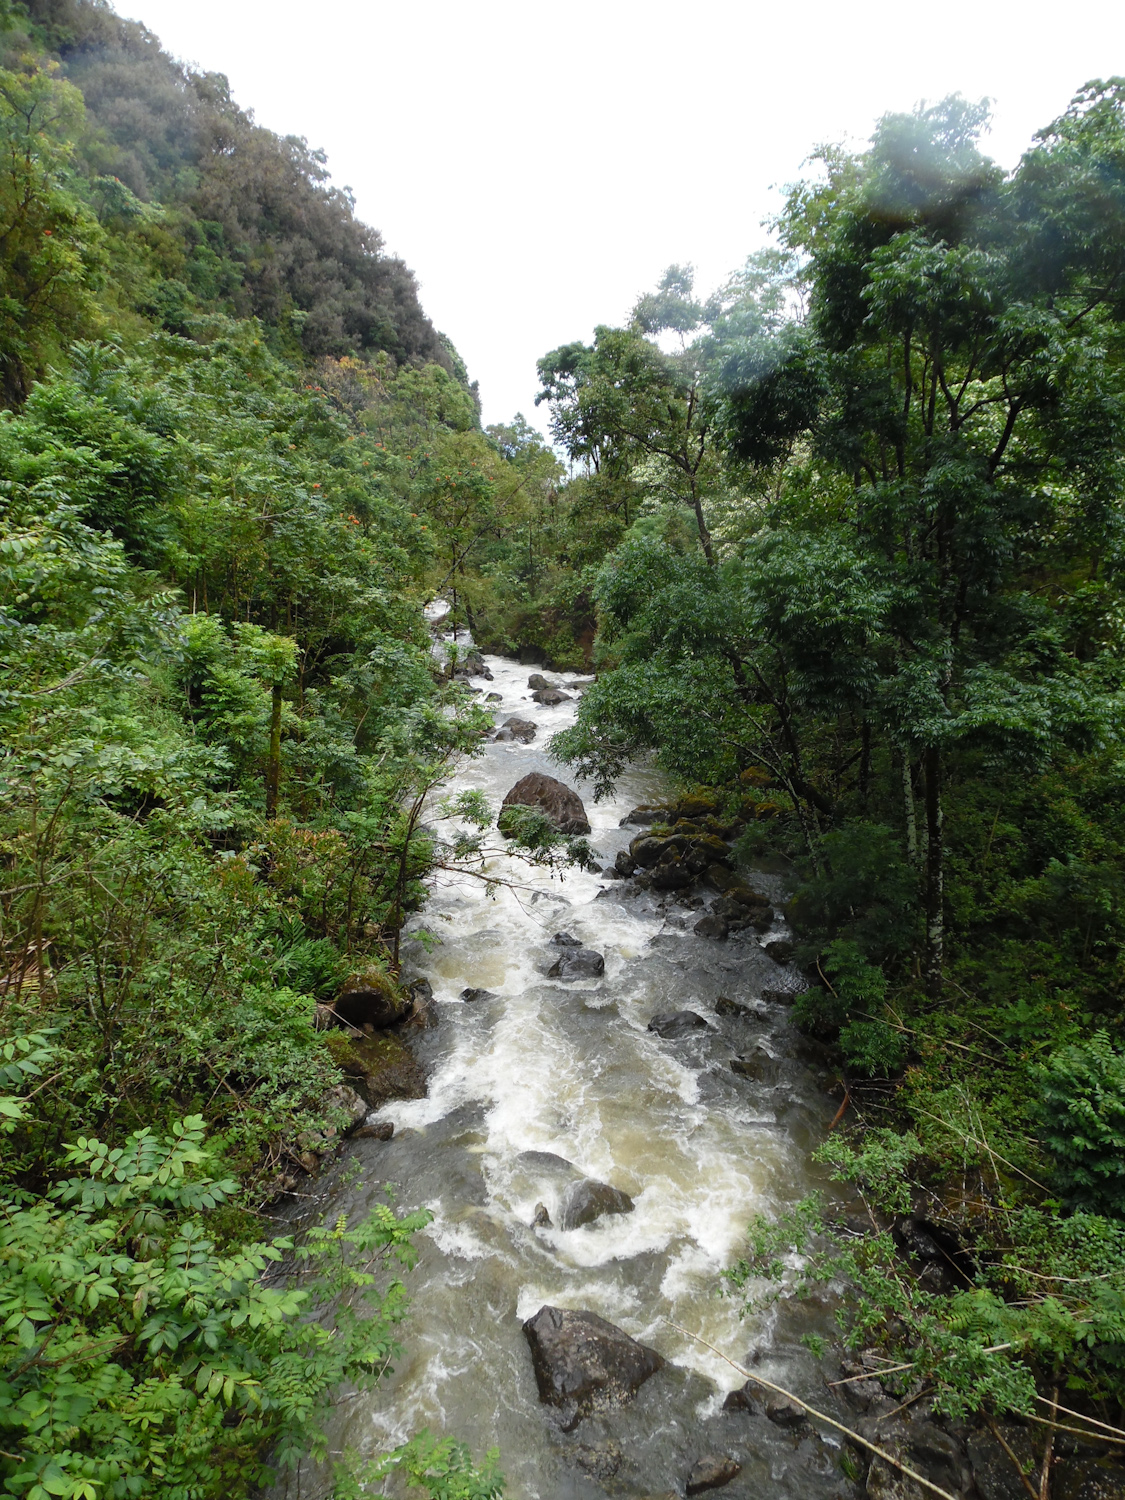 Hana road water falls